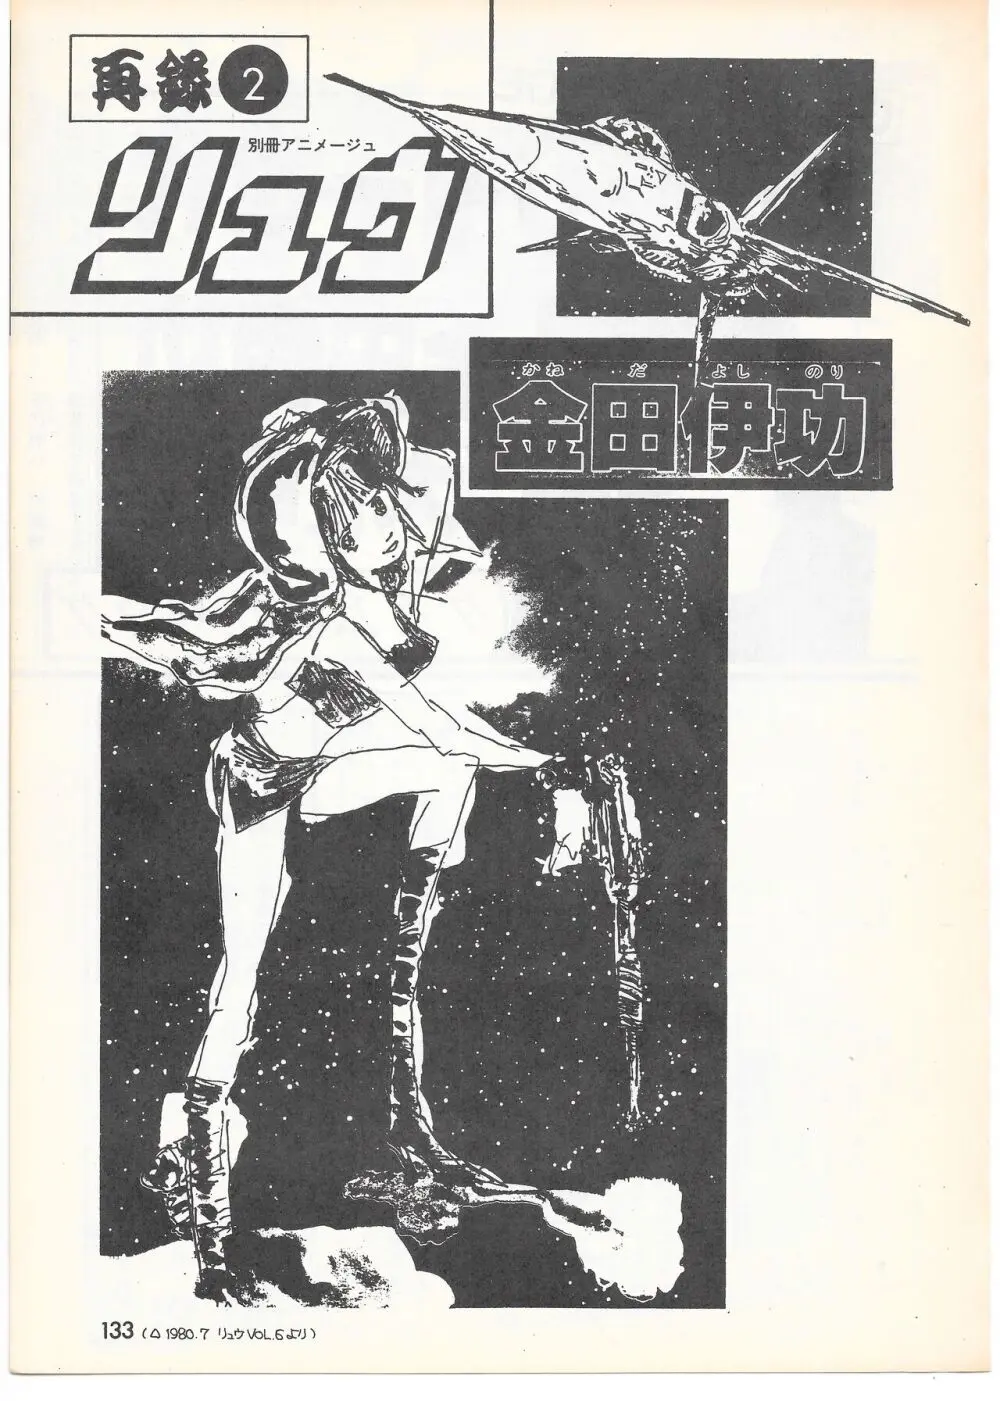 THE ANIMATOR 1 金田伊功特集号 - page128